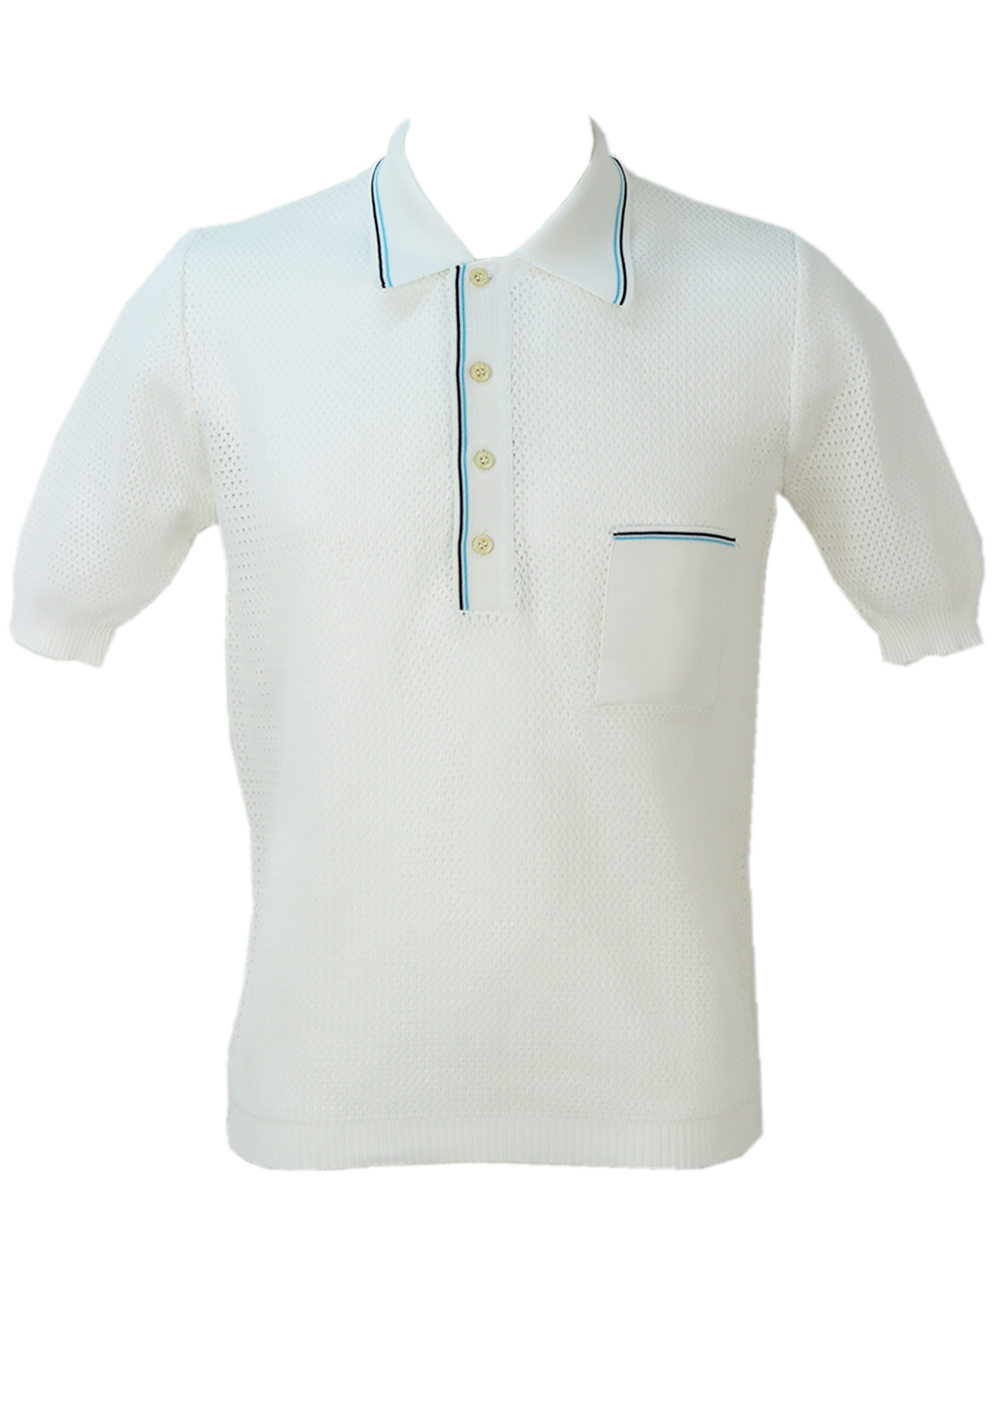 Vintage 1960's White Mesh Knit Italian Polo Shirt - M/L | Reign Vintage